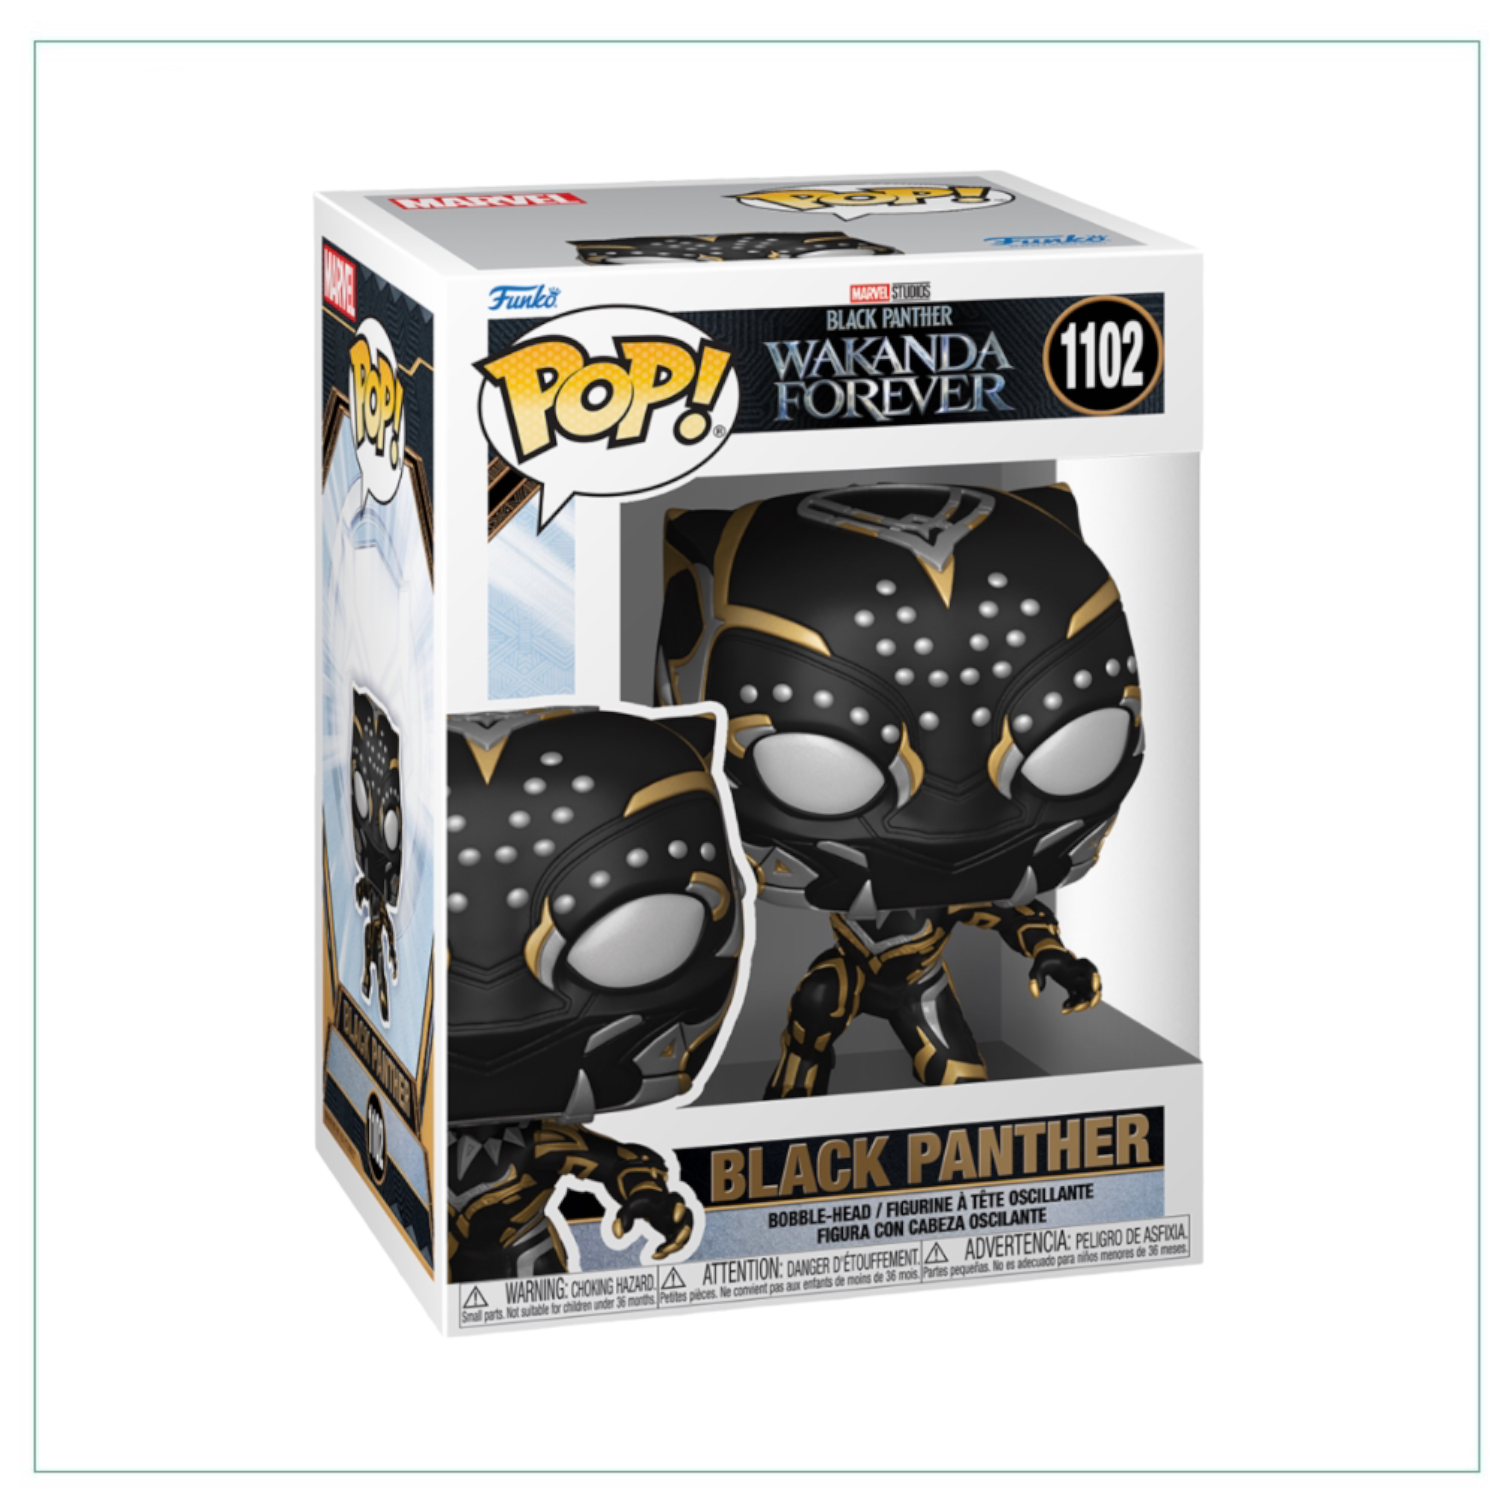 Black Panther #1102 Funko Pop! Wakanda Forever